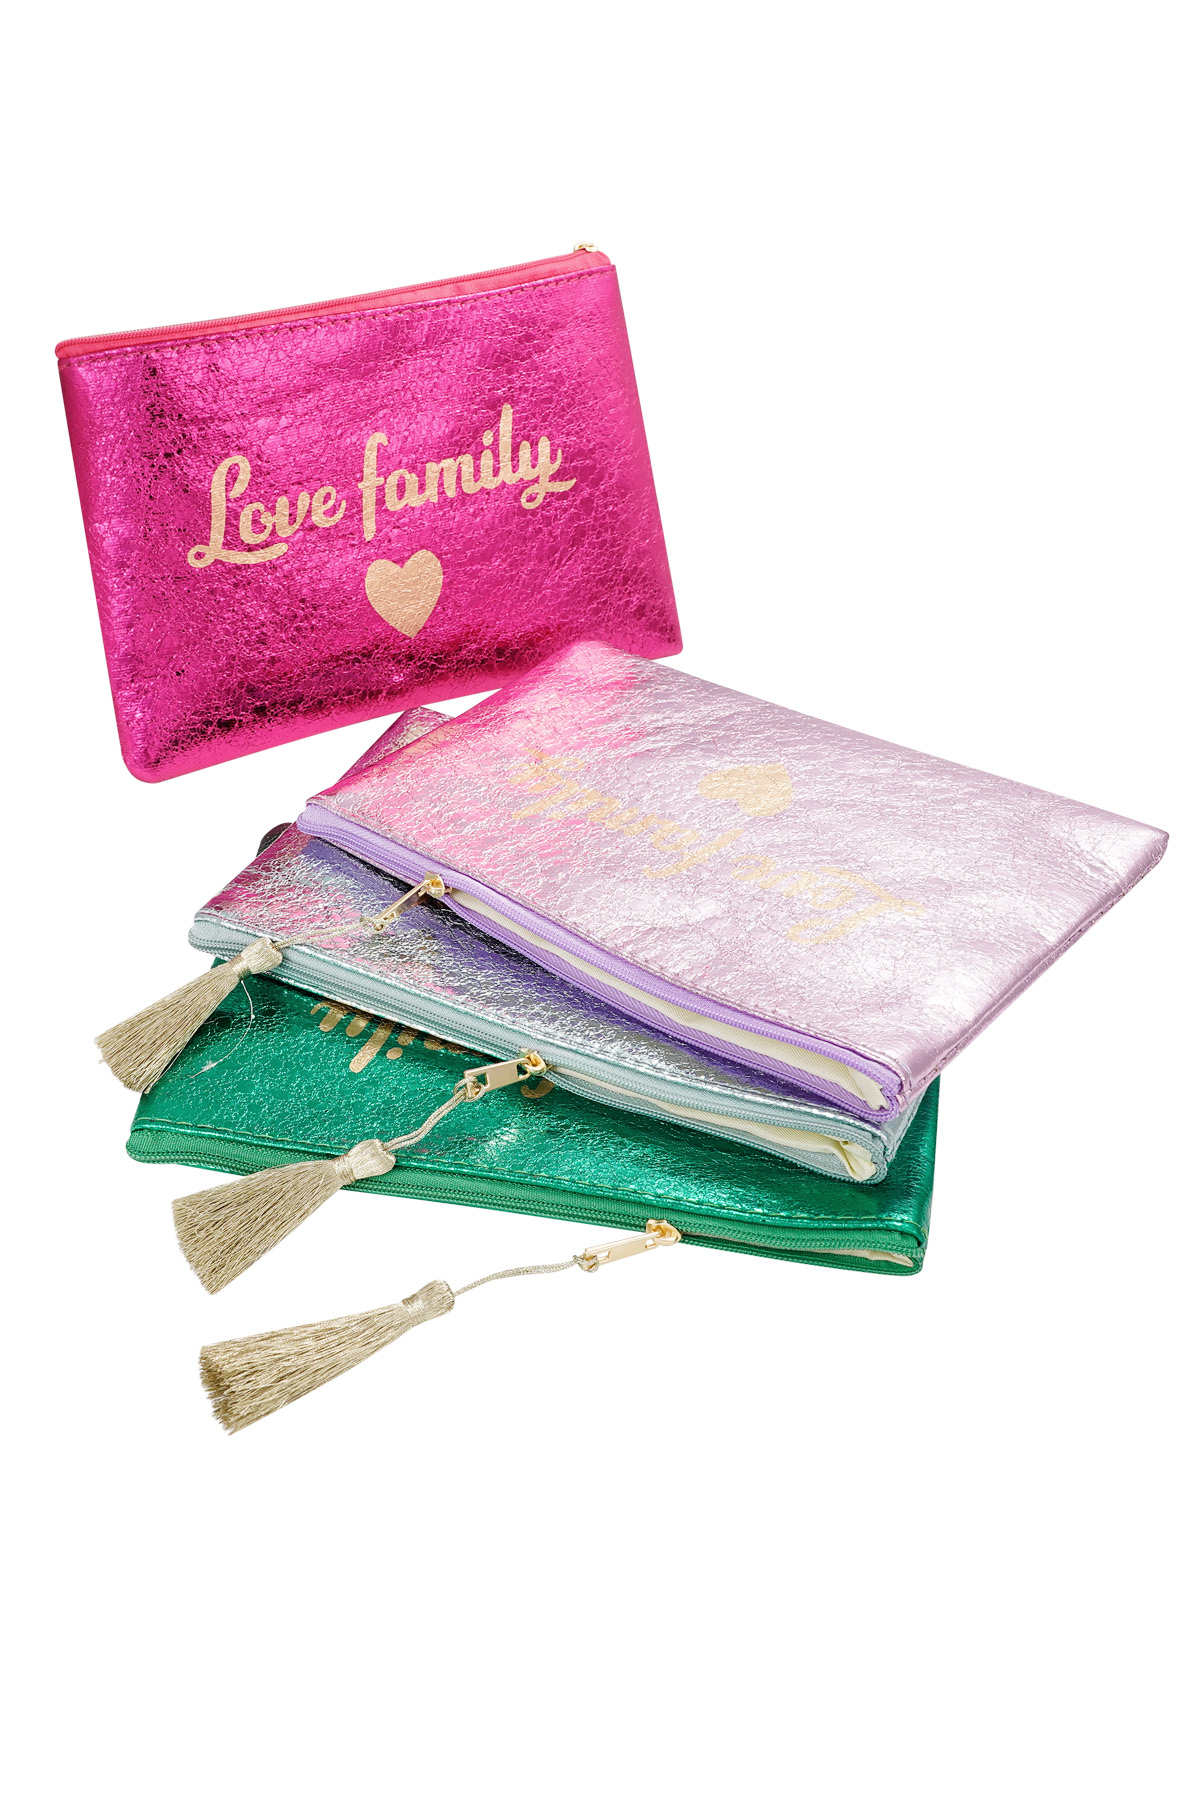 Make-up bag metallic love family - pink h5 Picture4